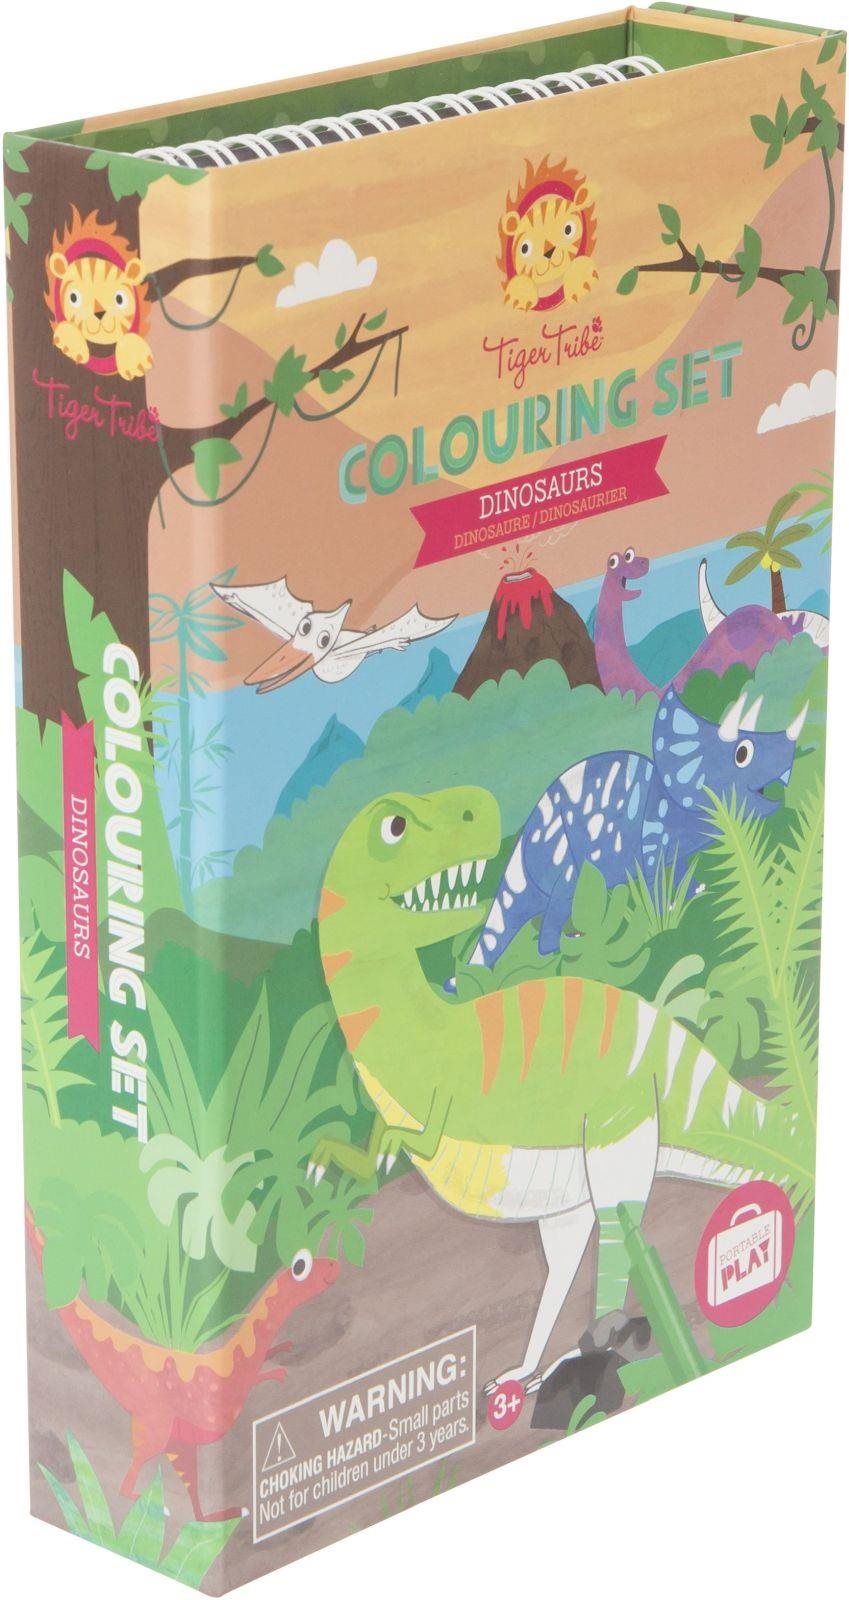 Colouring Sets / Dinoszaurusz